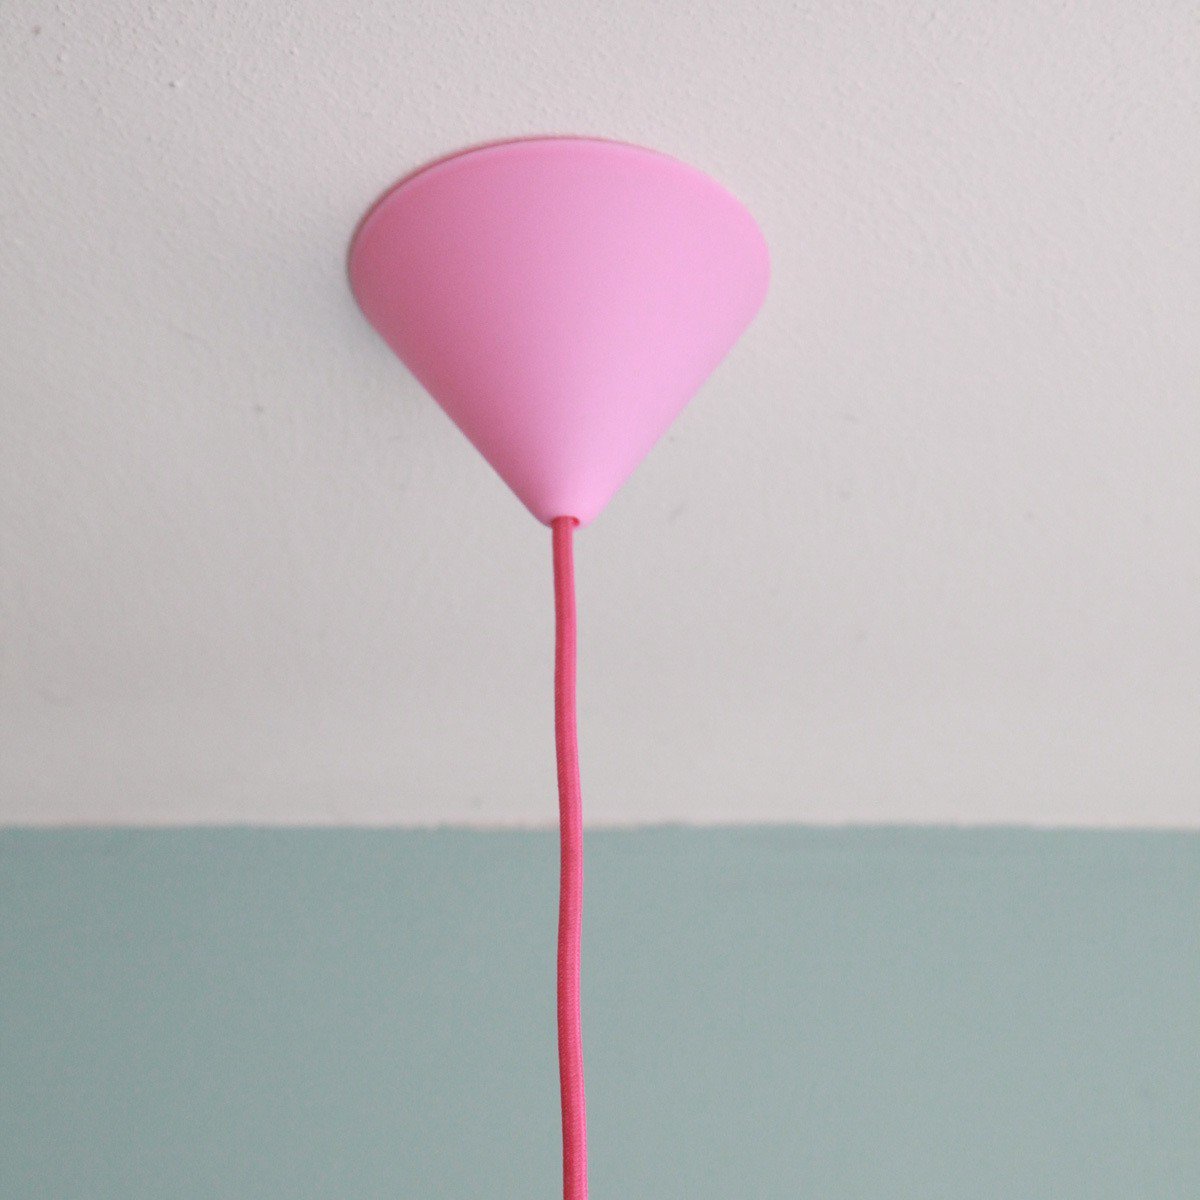 Hanglamp met vogeltjes | Ø 35 cm | Roze